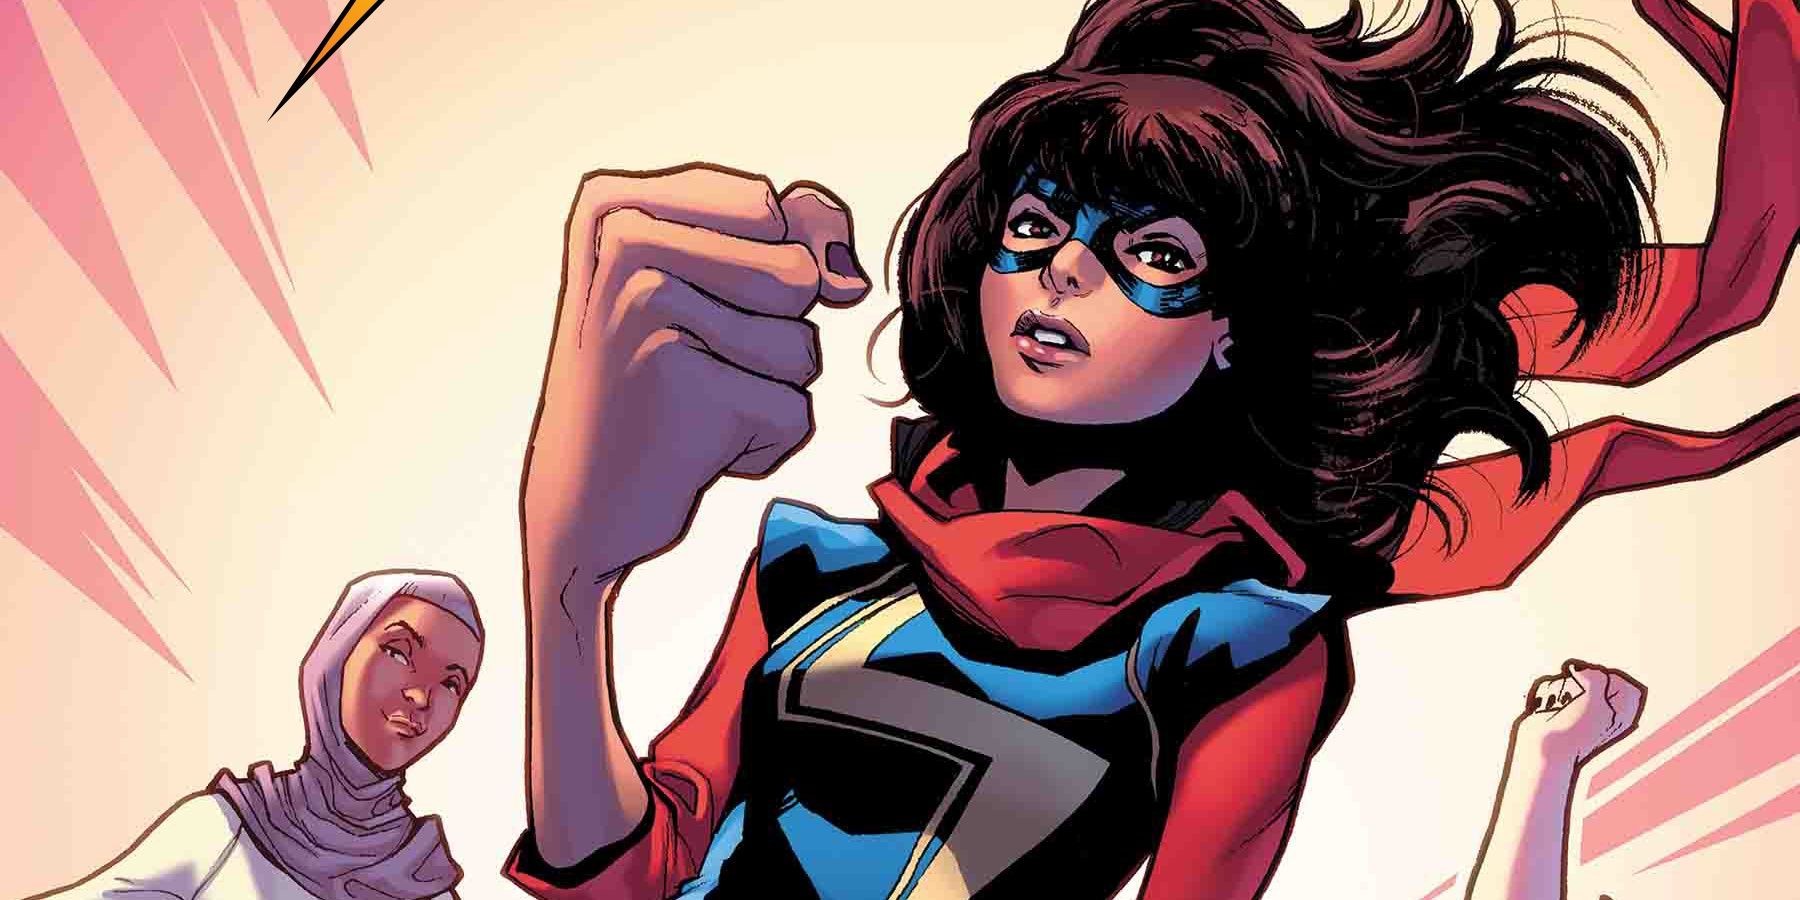 Kamala Khan embiggening her fist as Ms. Marvel